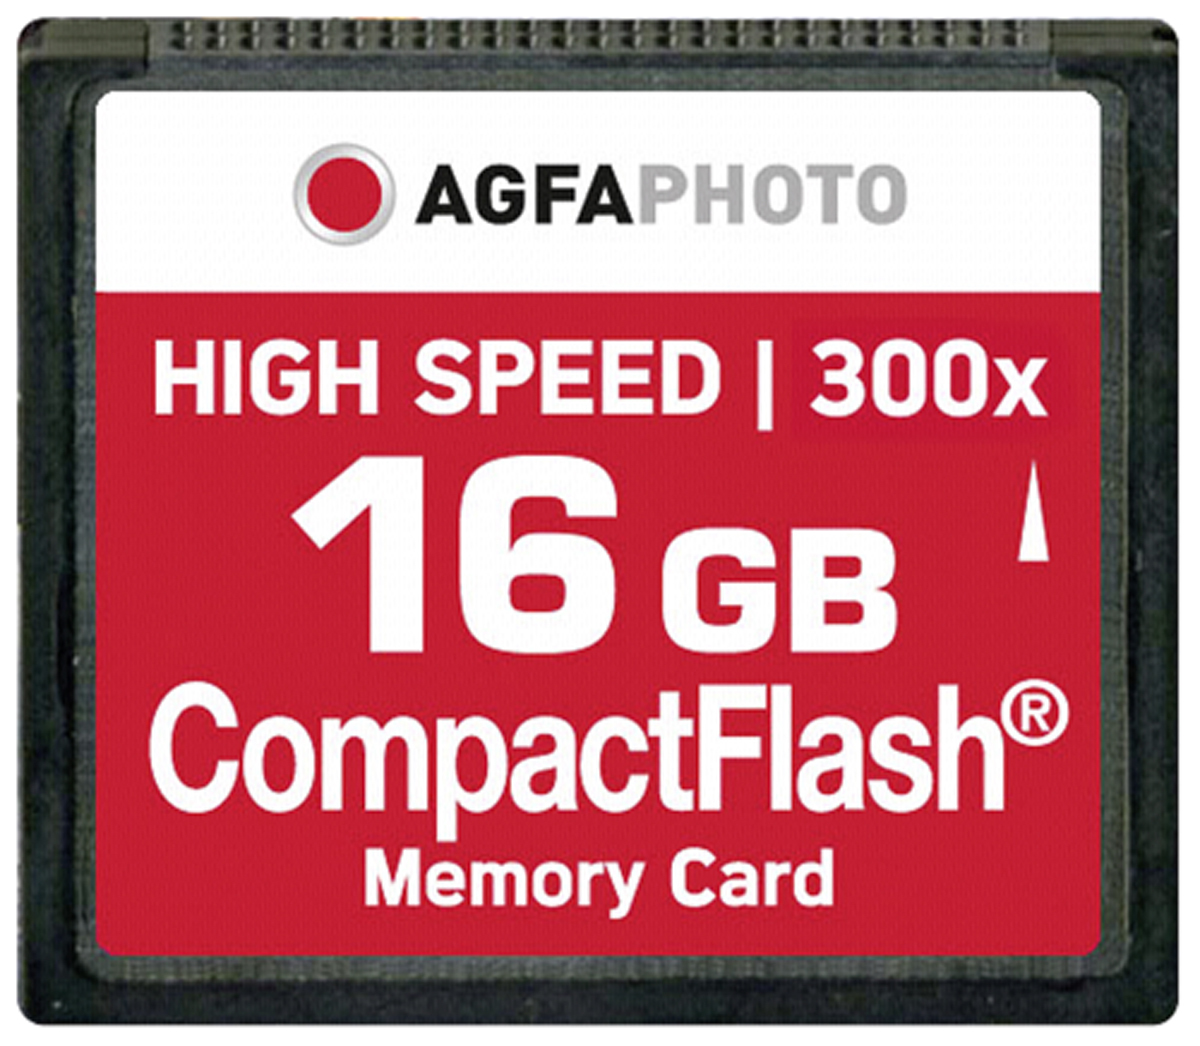 AgfaPhoto 16 GB CompactFlash Bild 01